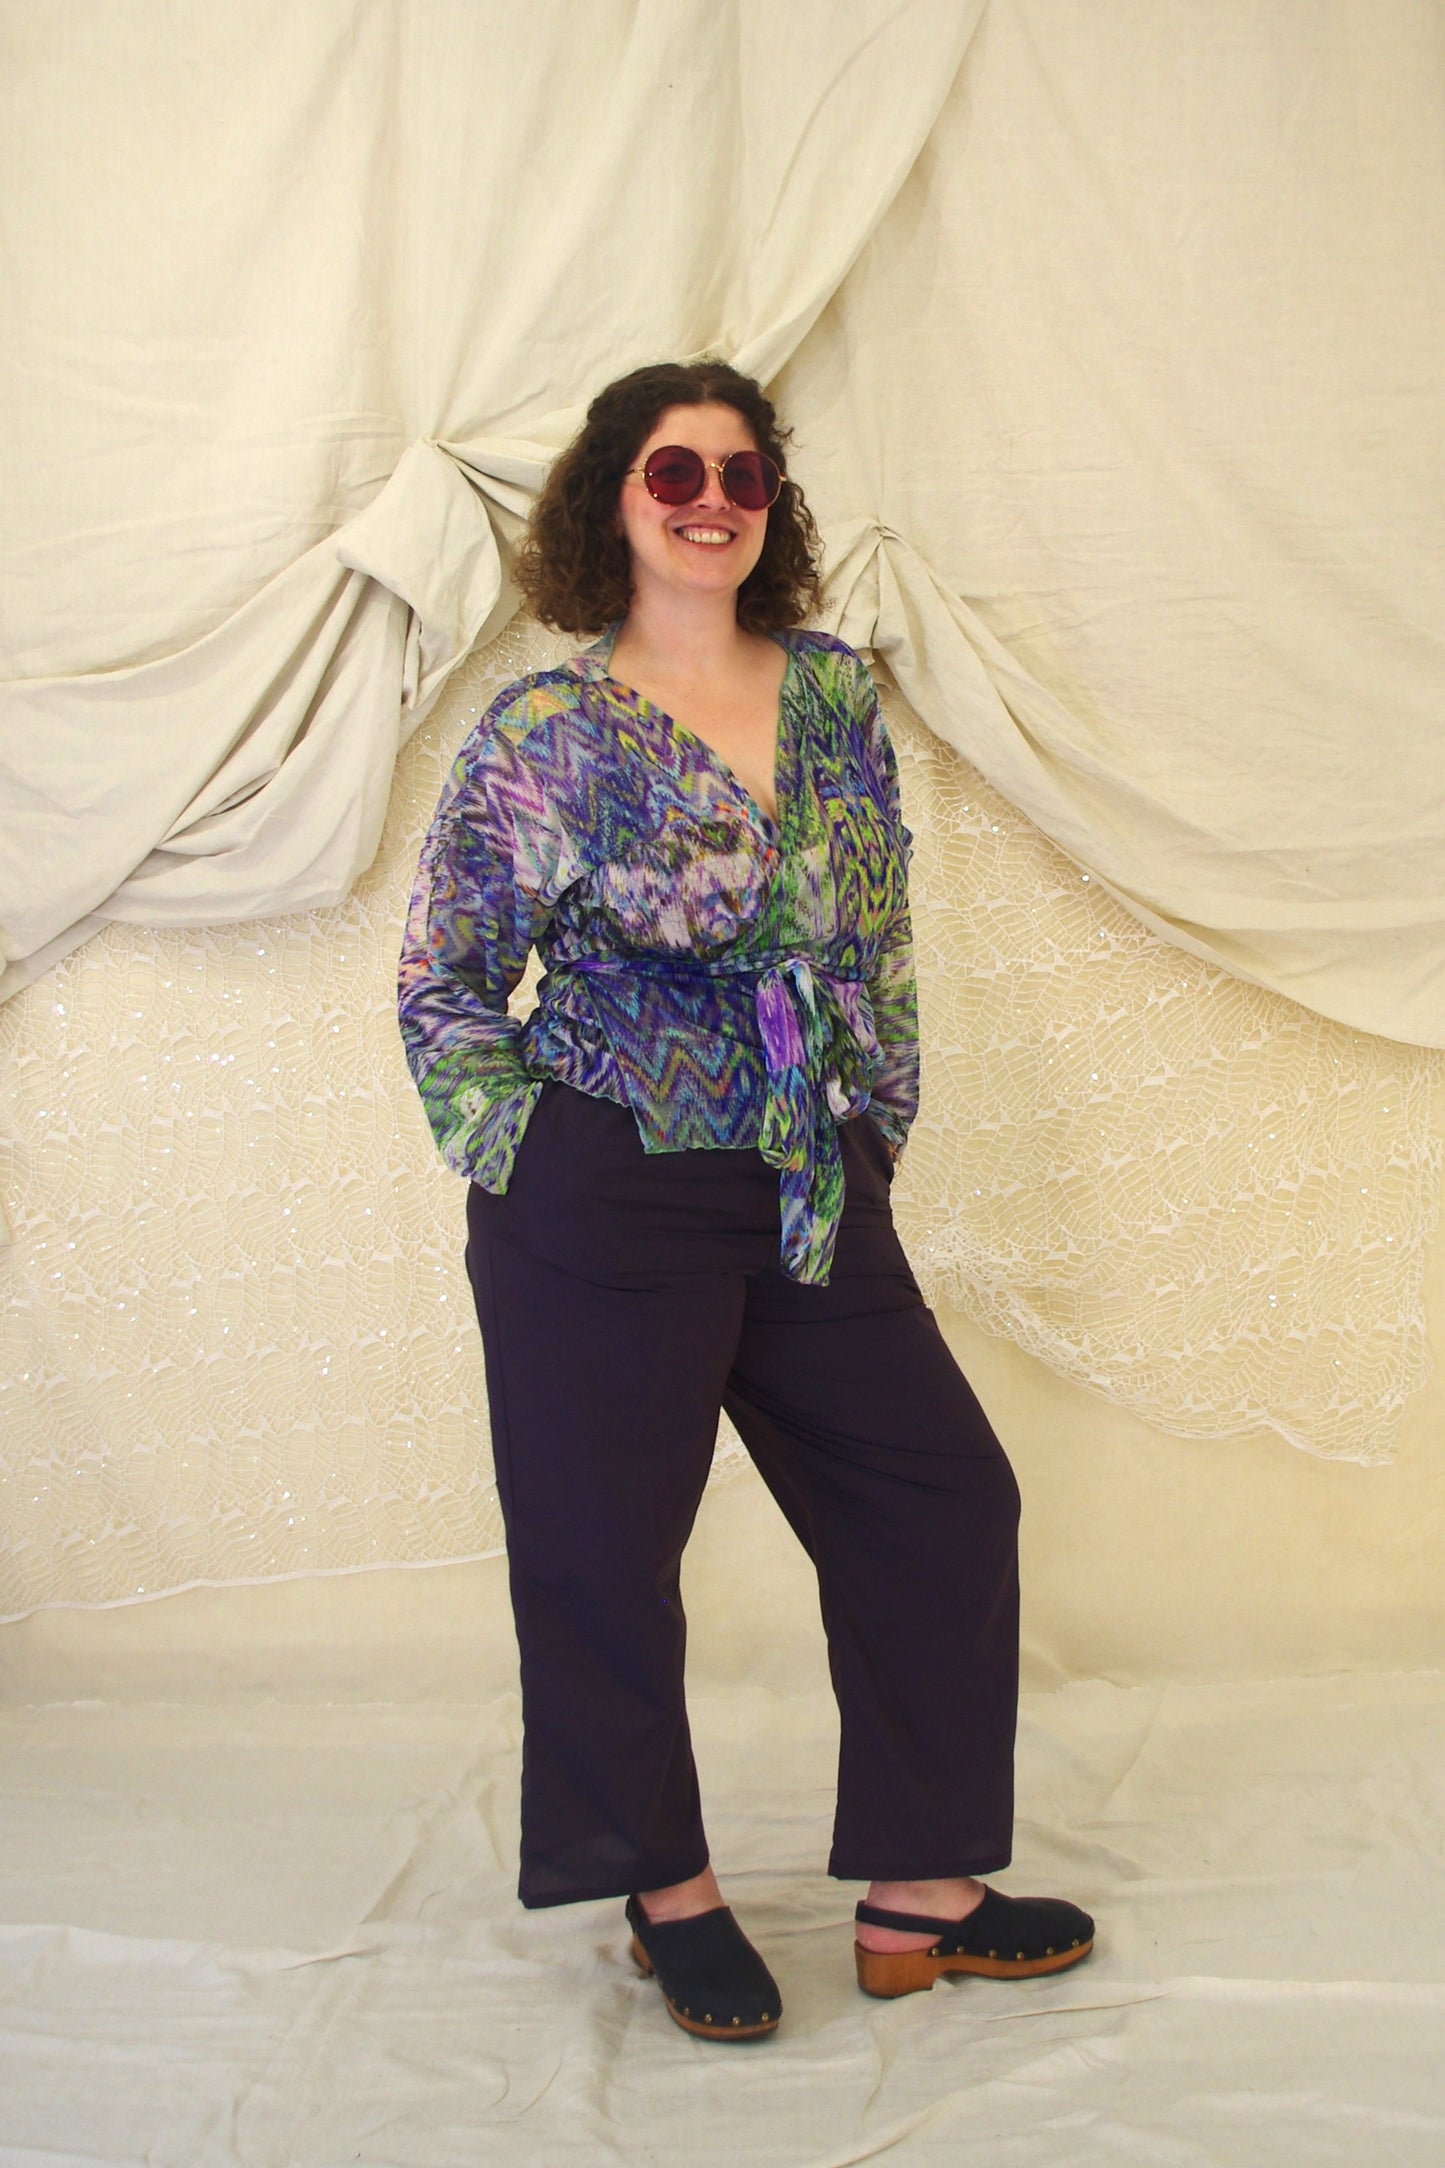 Belly Pantaloni in cotone blu viola cangiante TAGLIA 3